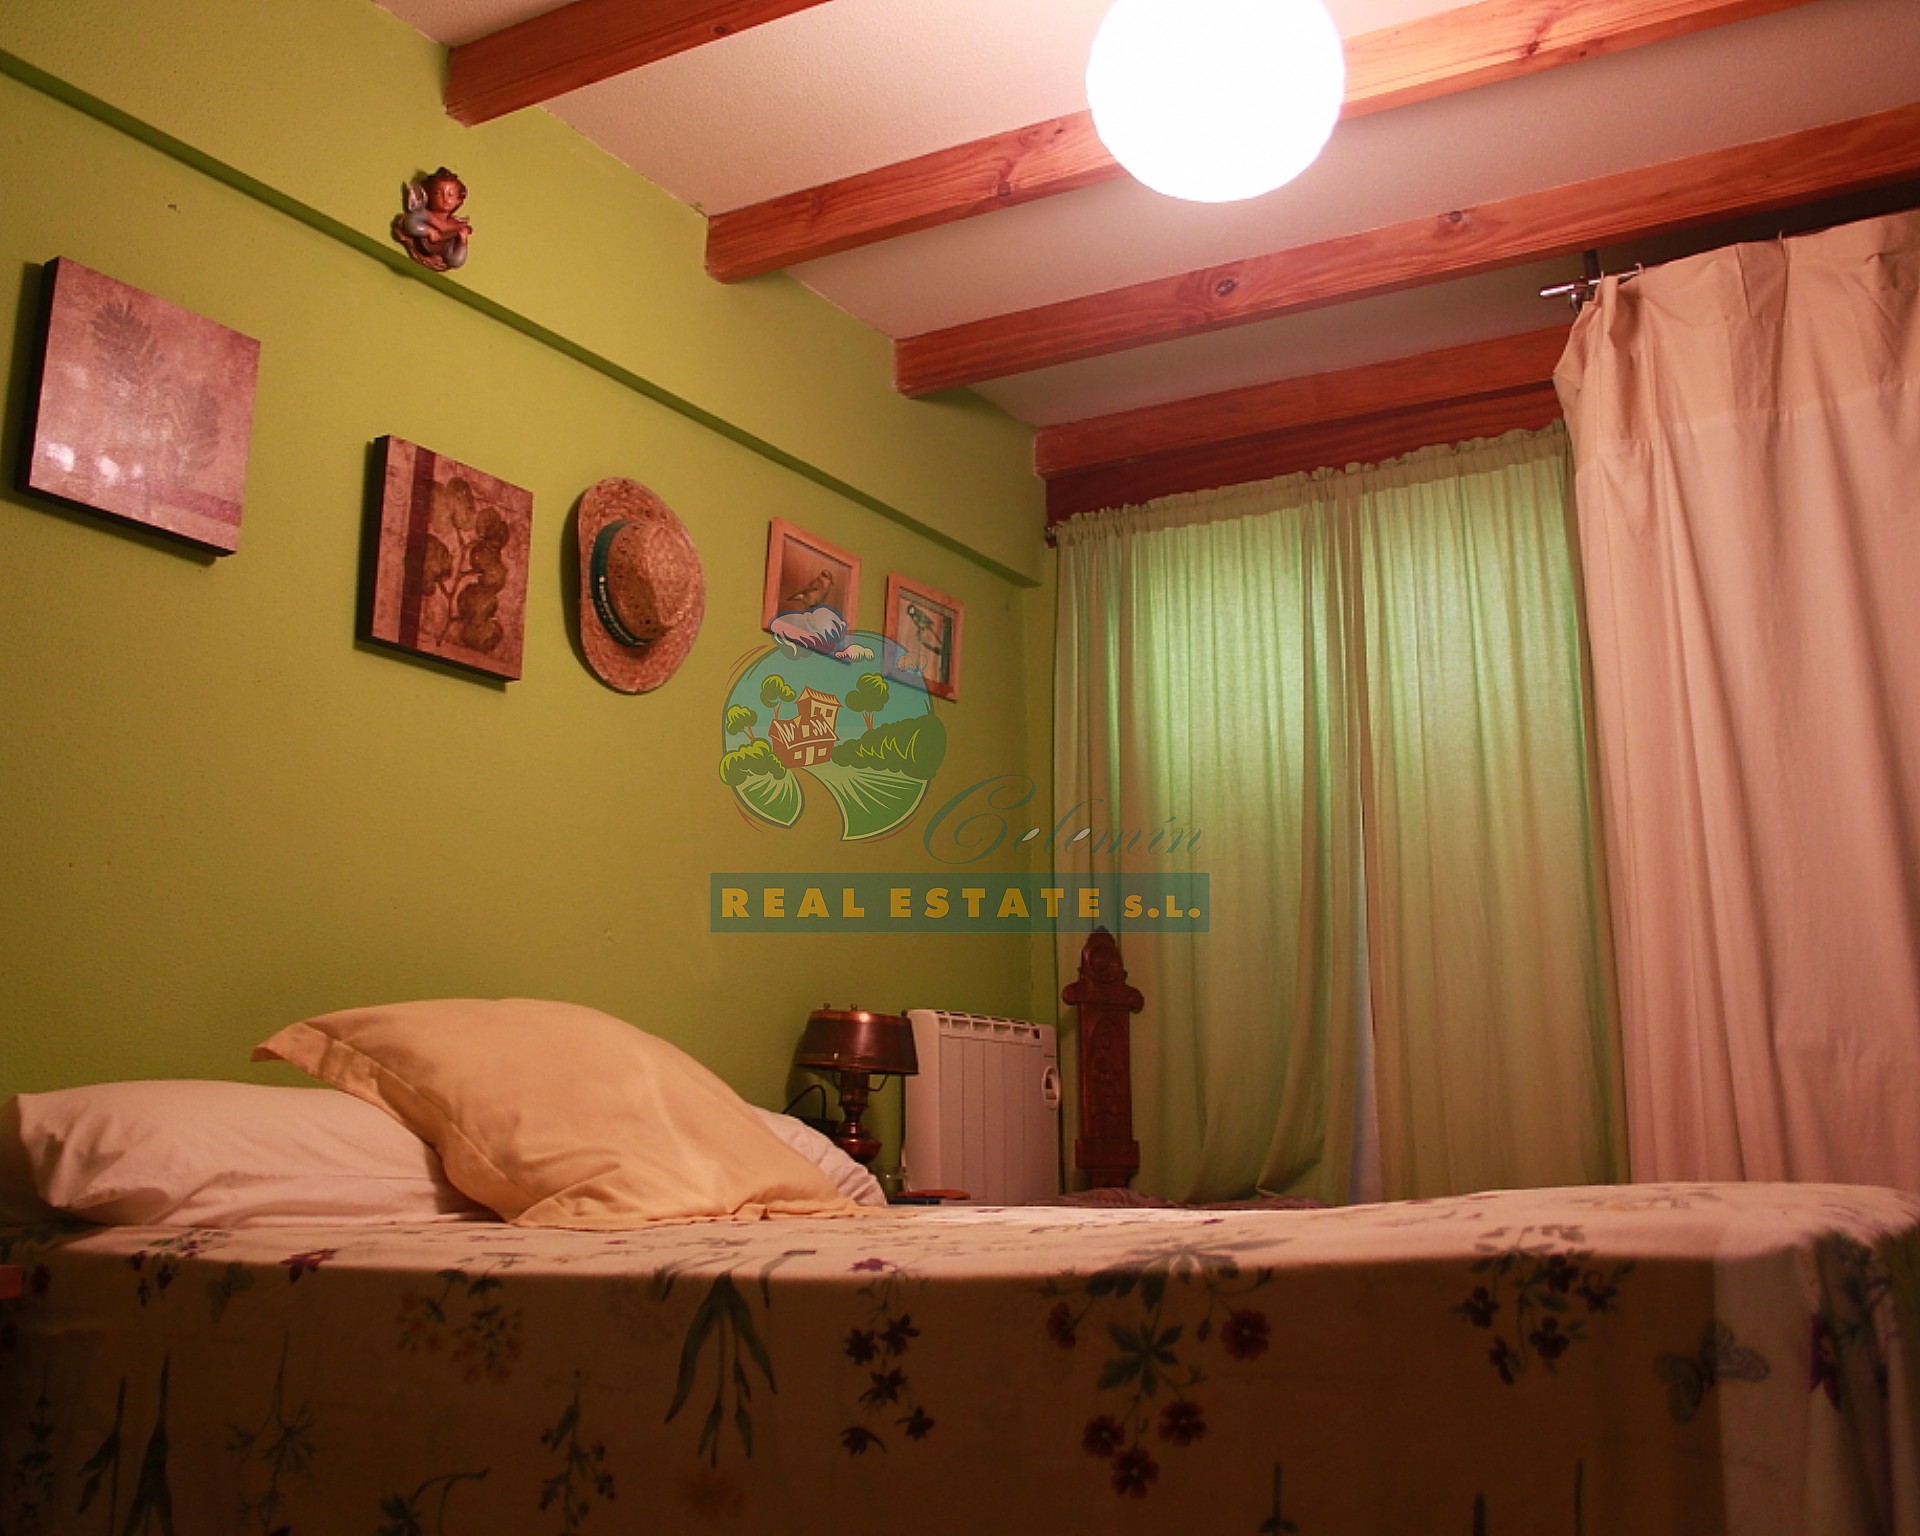 Restored 2 bedroom house in Sierra de Gredos.